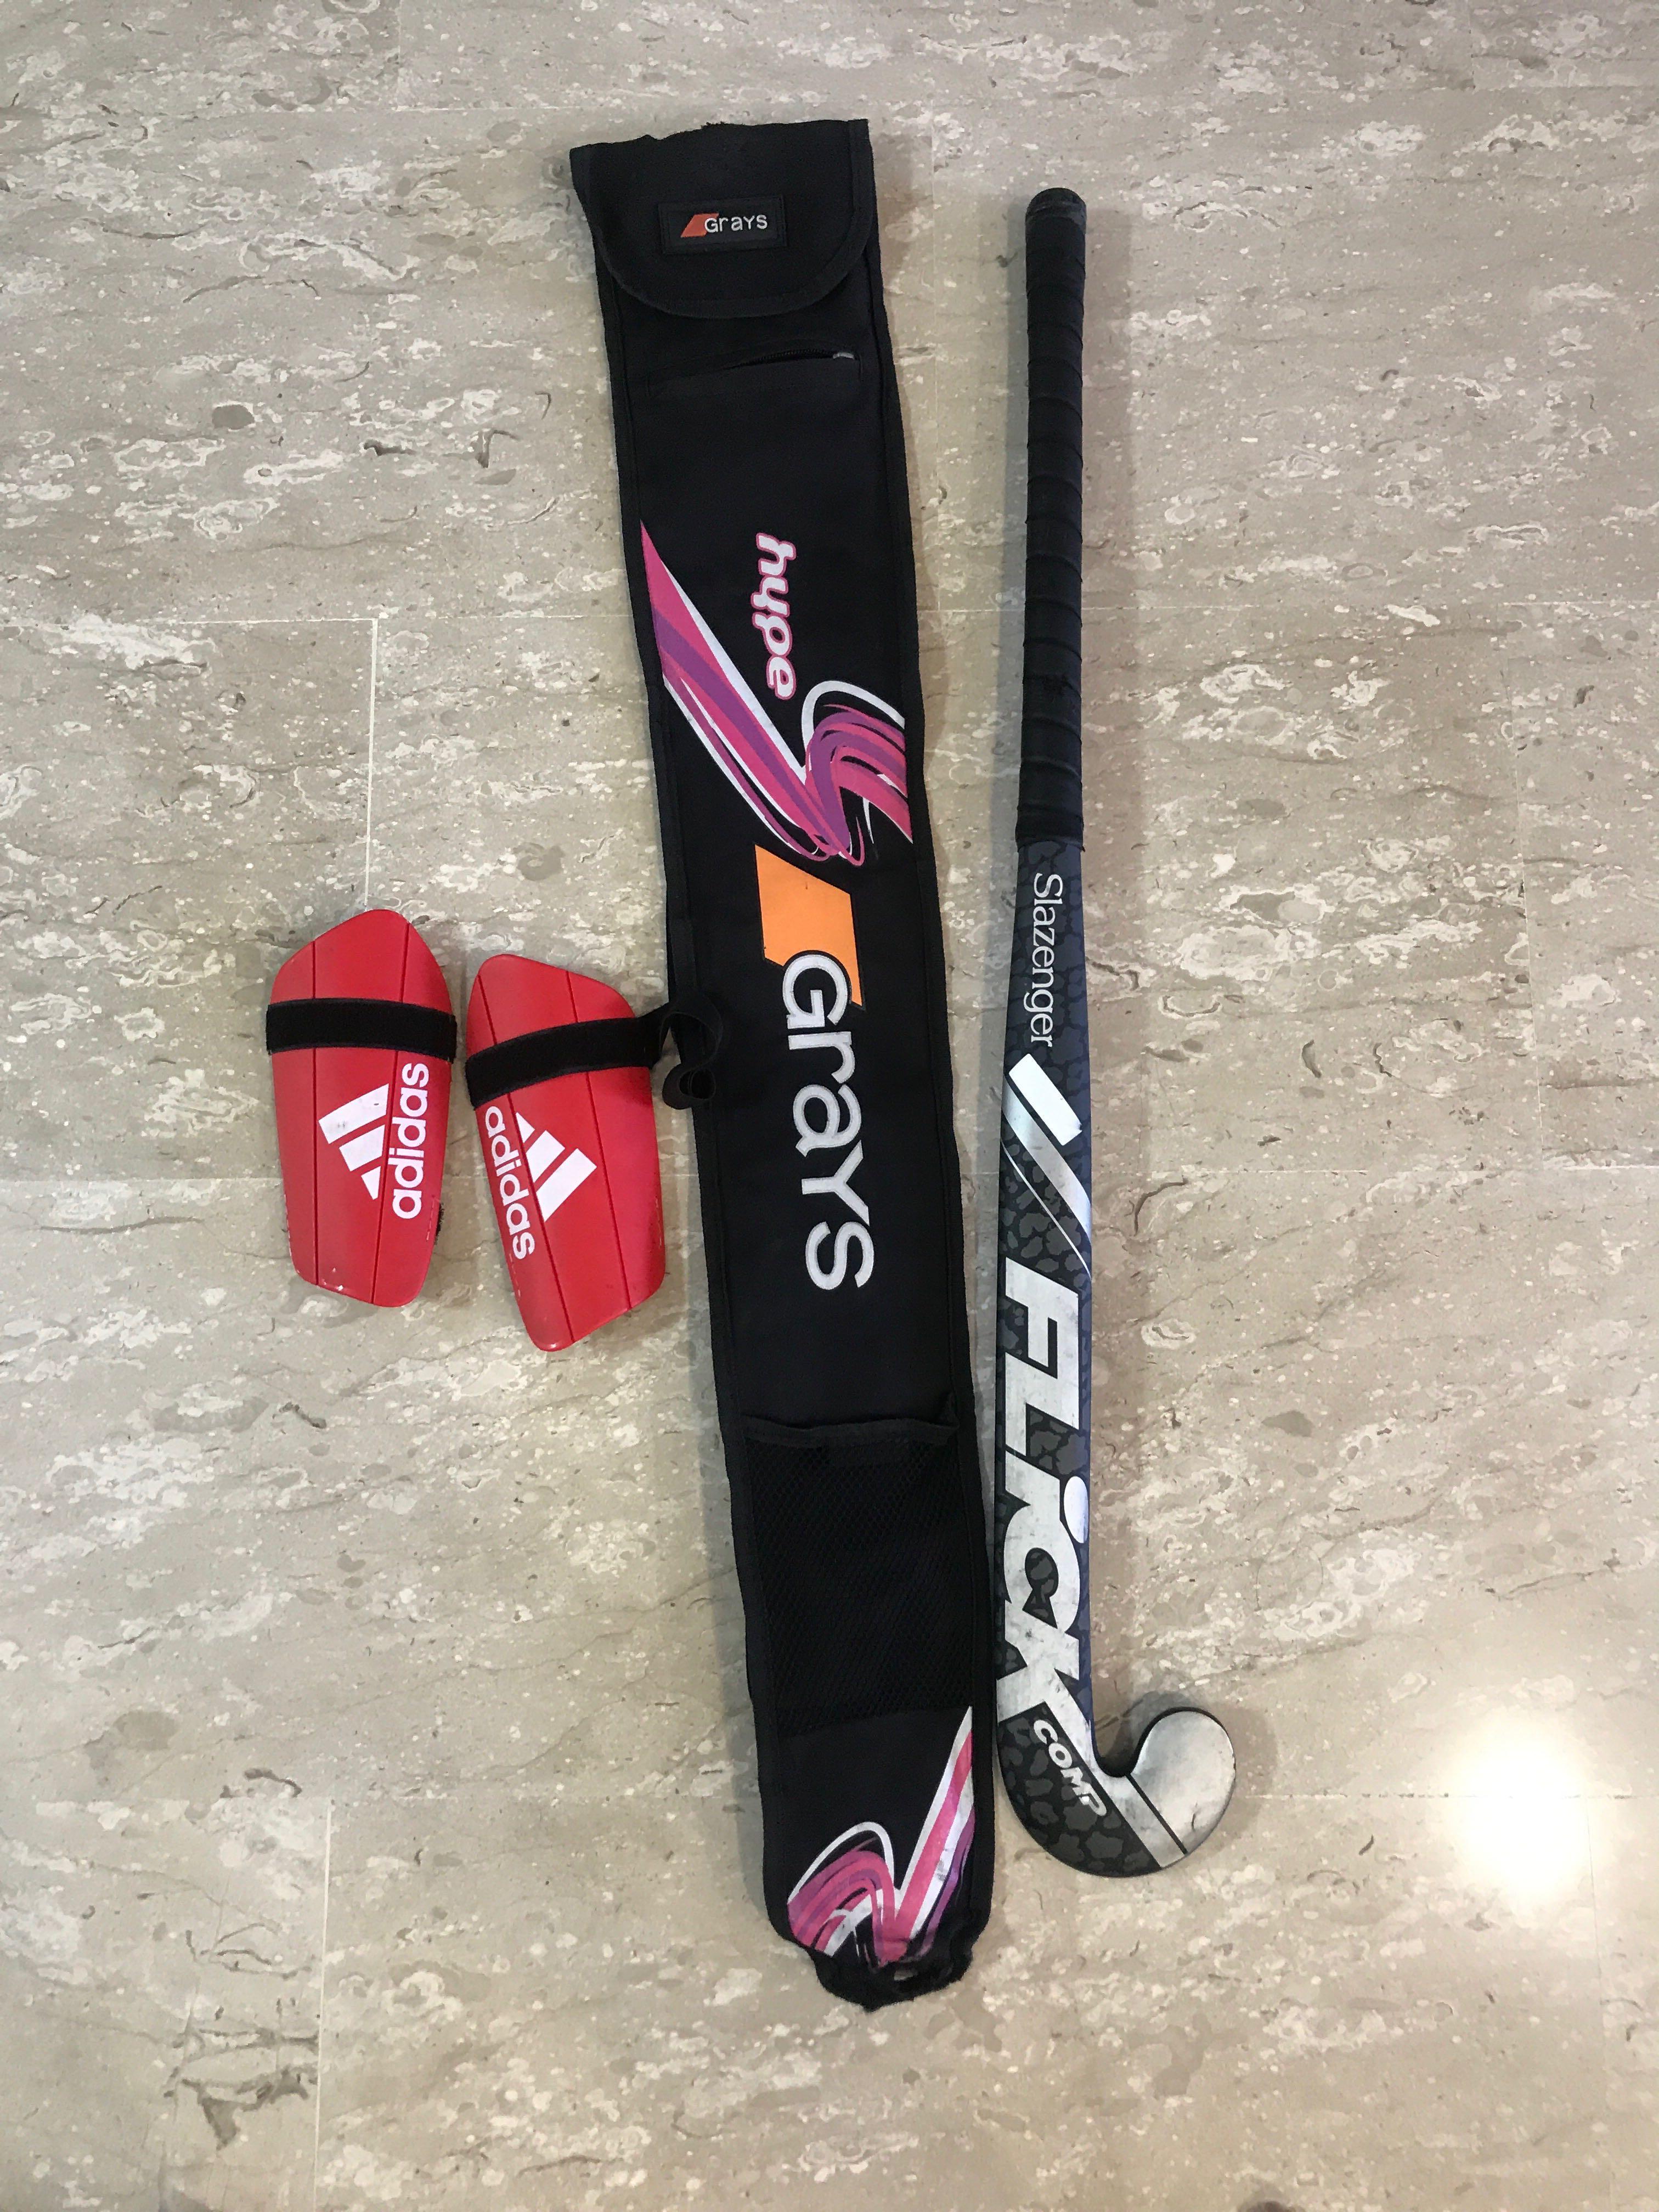 Slazenger Flick Hockey Stick Players Equipment Training Sports Accessories 